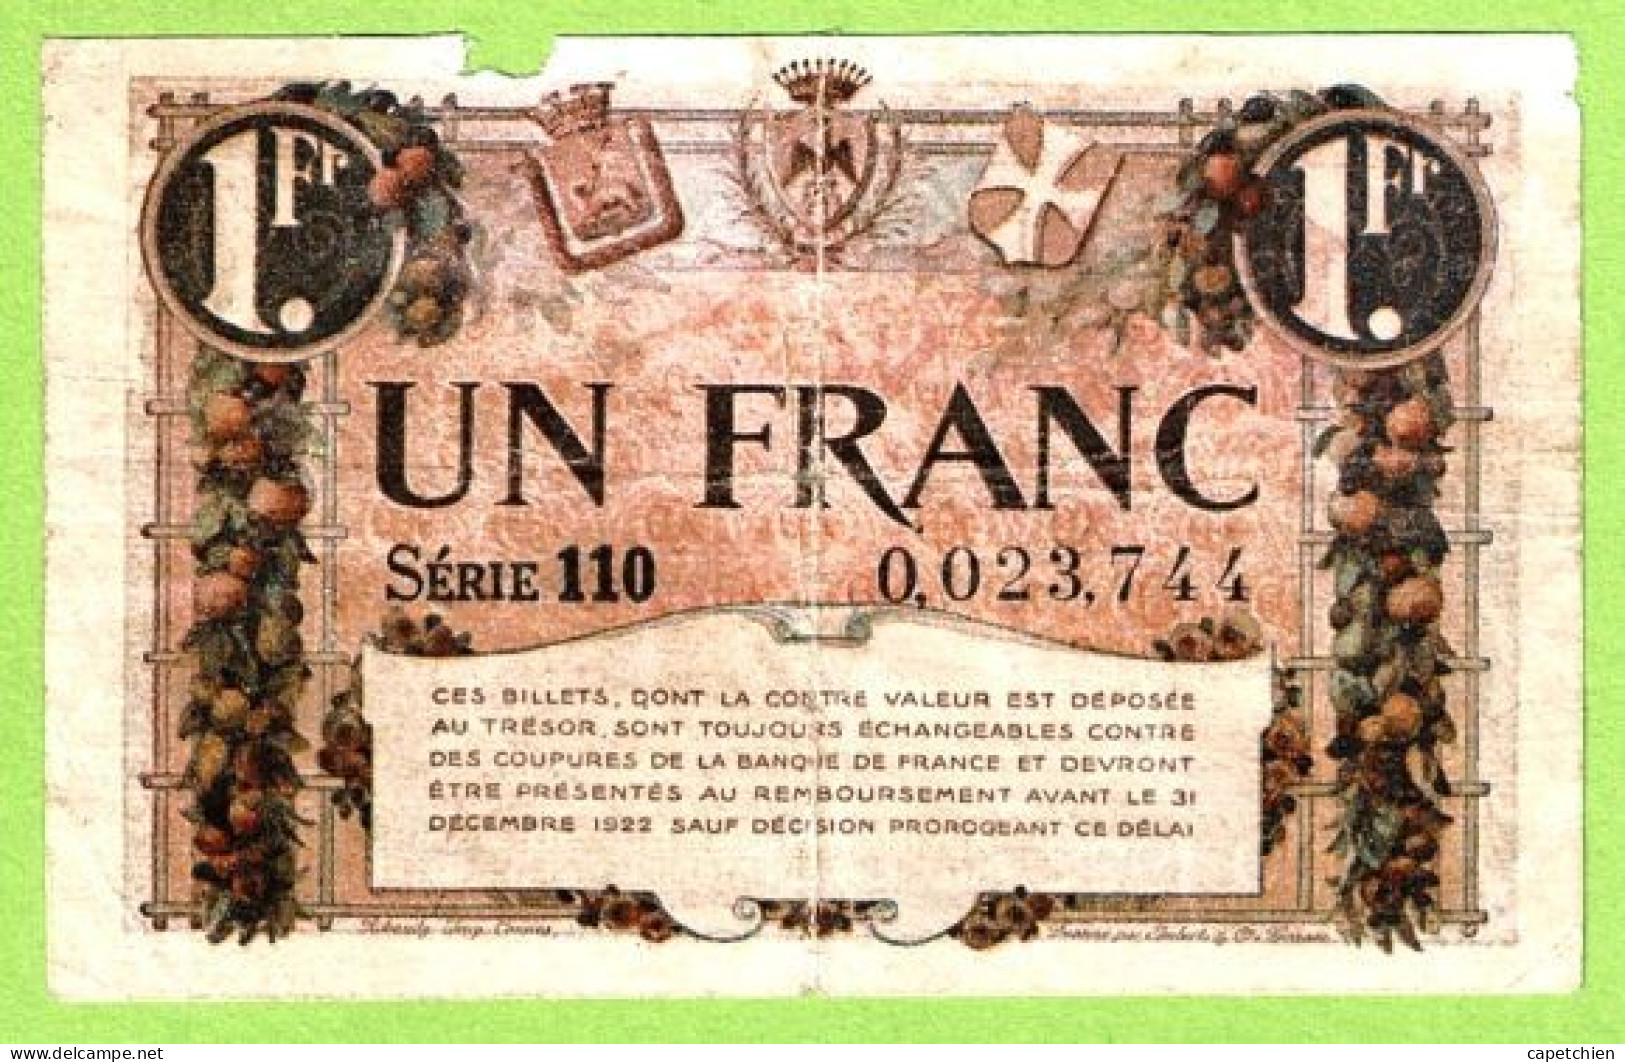 FRANCE / CHAMBRE De COMMERCE / NICE - ALPES MARITIMES / 1 FRANC / 30 AVRIL 1920 / N° 0.023.744 / SERIE 110 - Chamber Of Commerce